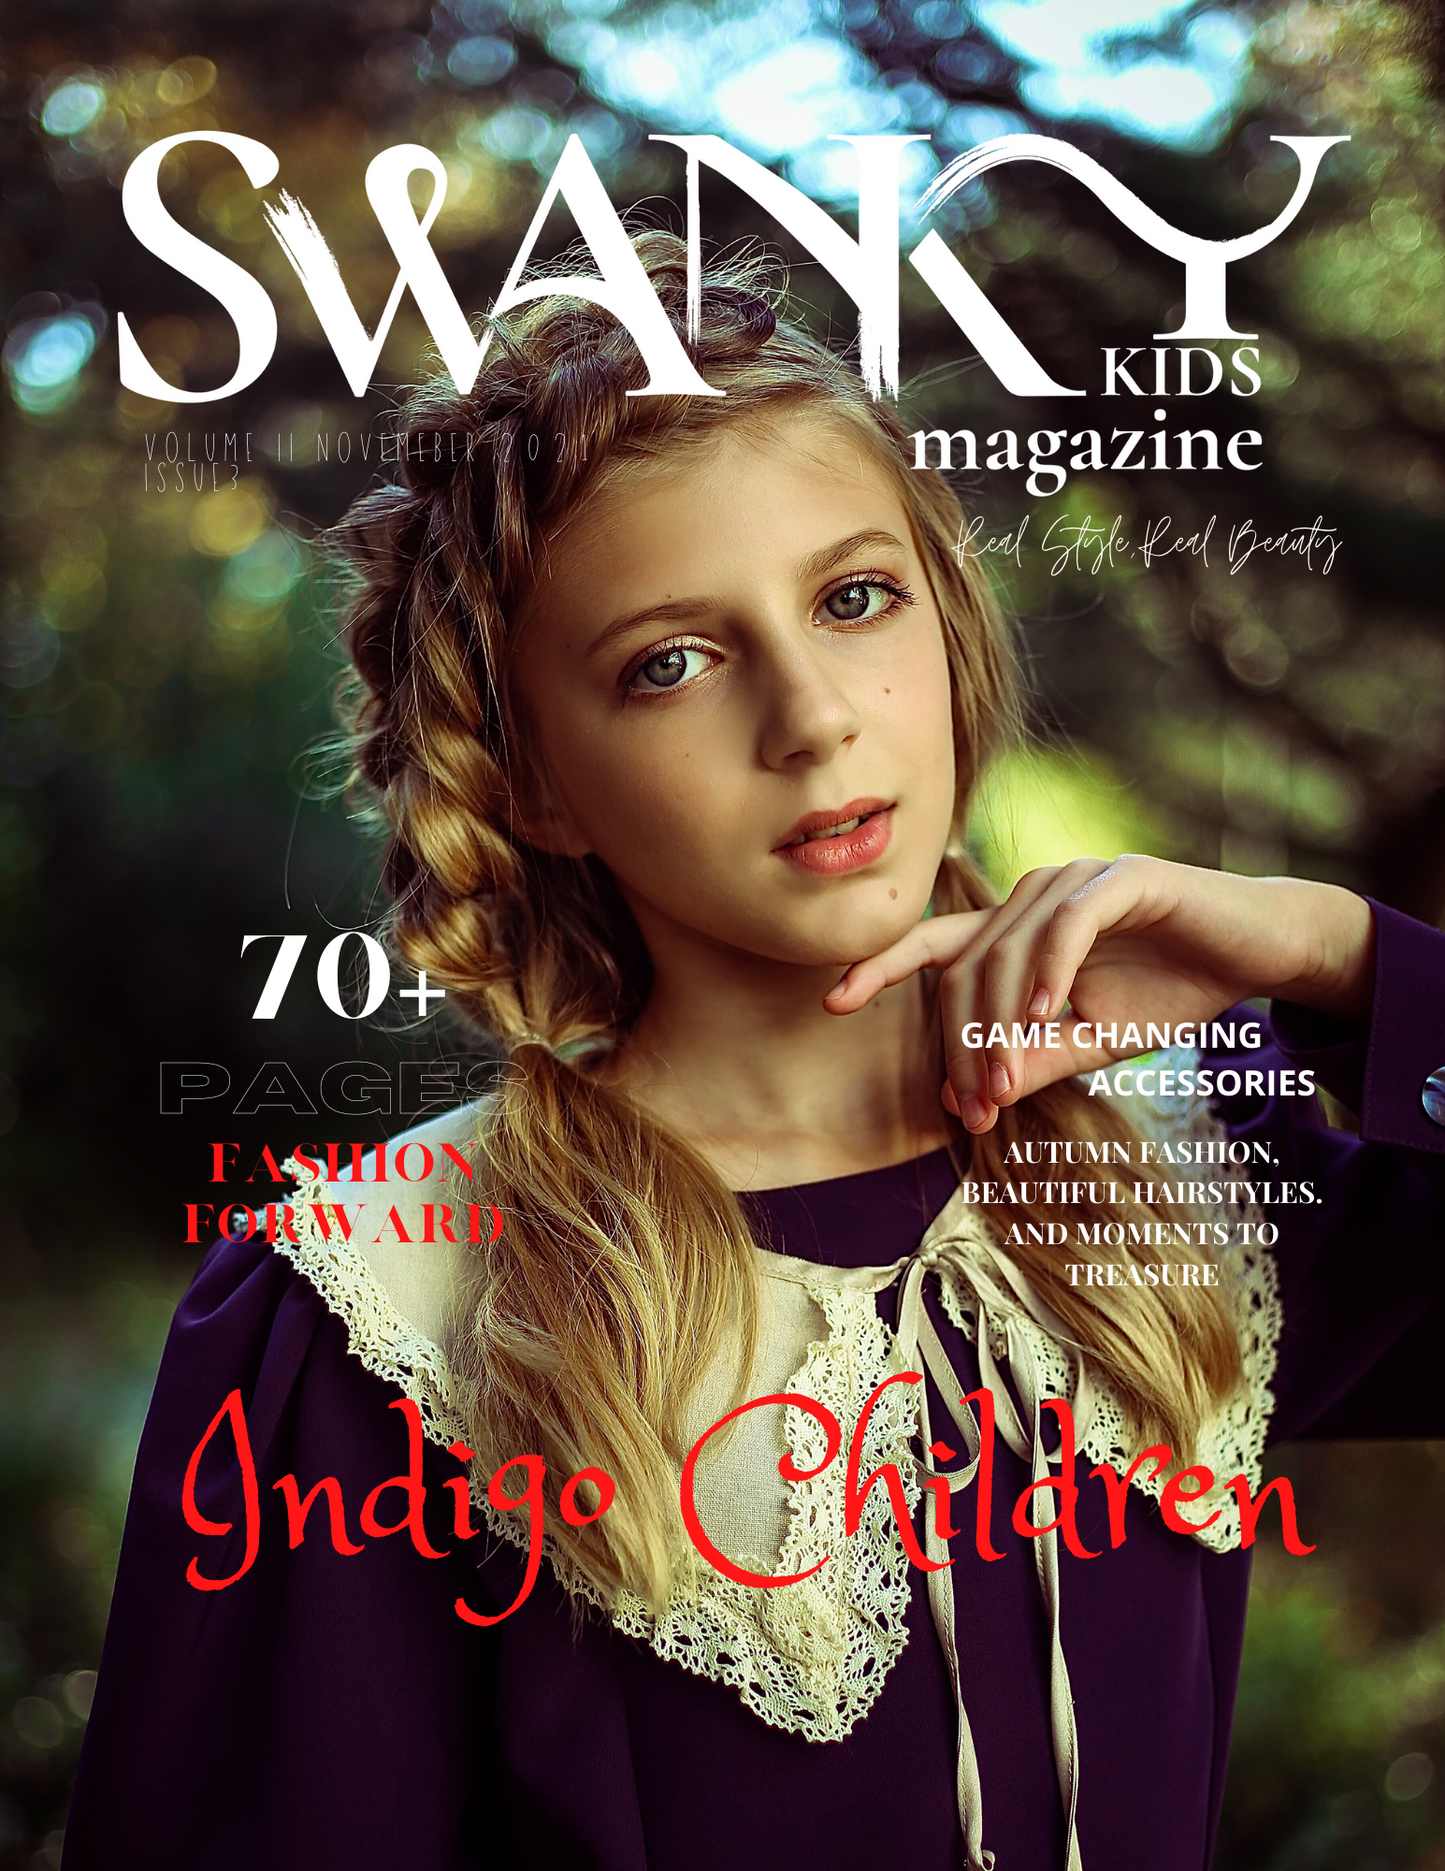 Swanky Kids Magazine VOL II Issue 3 - PRINT ISSUE